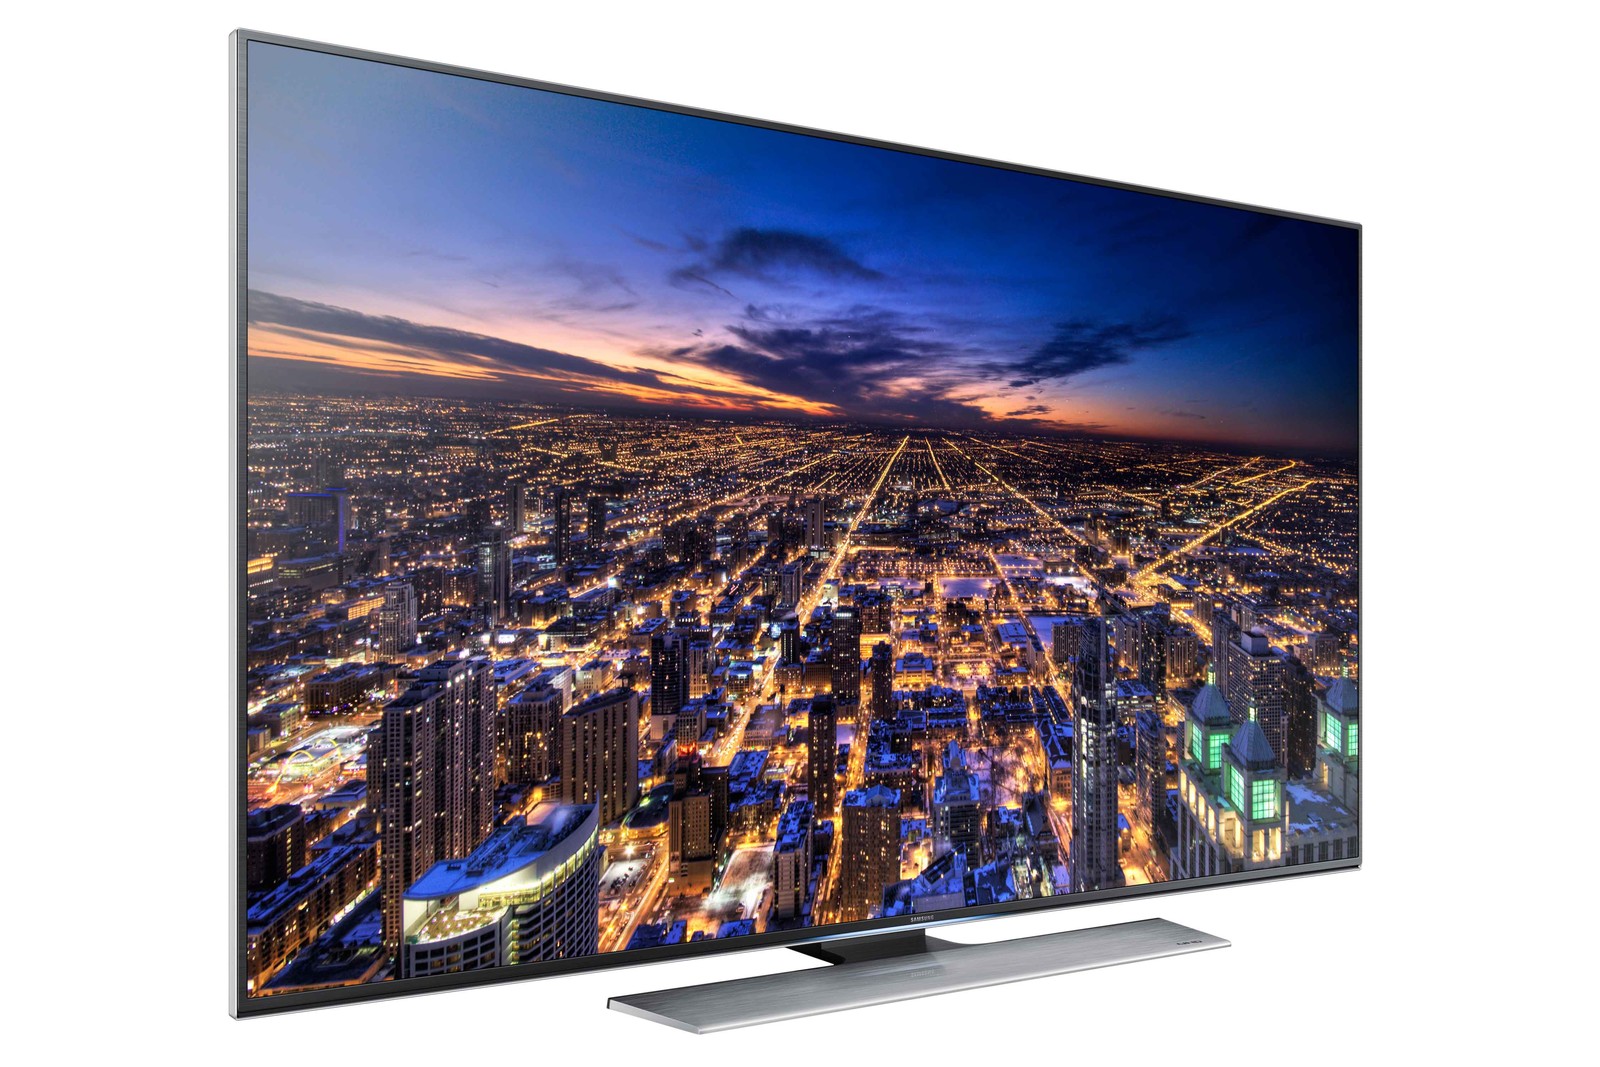 Обзор 75-дюймового 4K-телевизора Samsung UE75HU7500 - 12